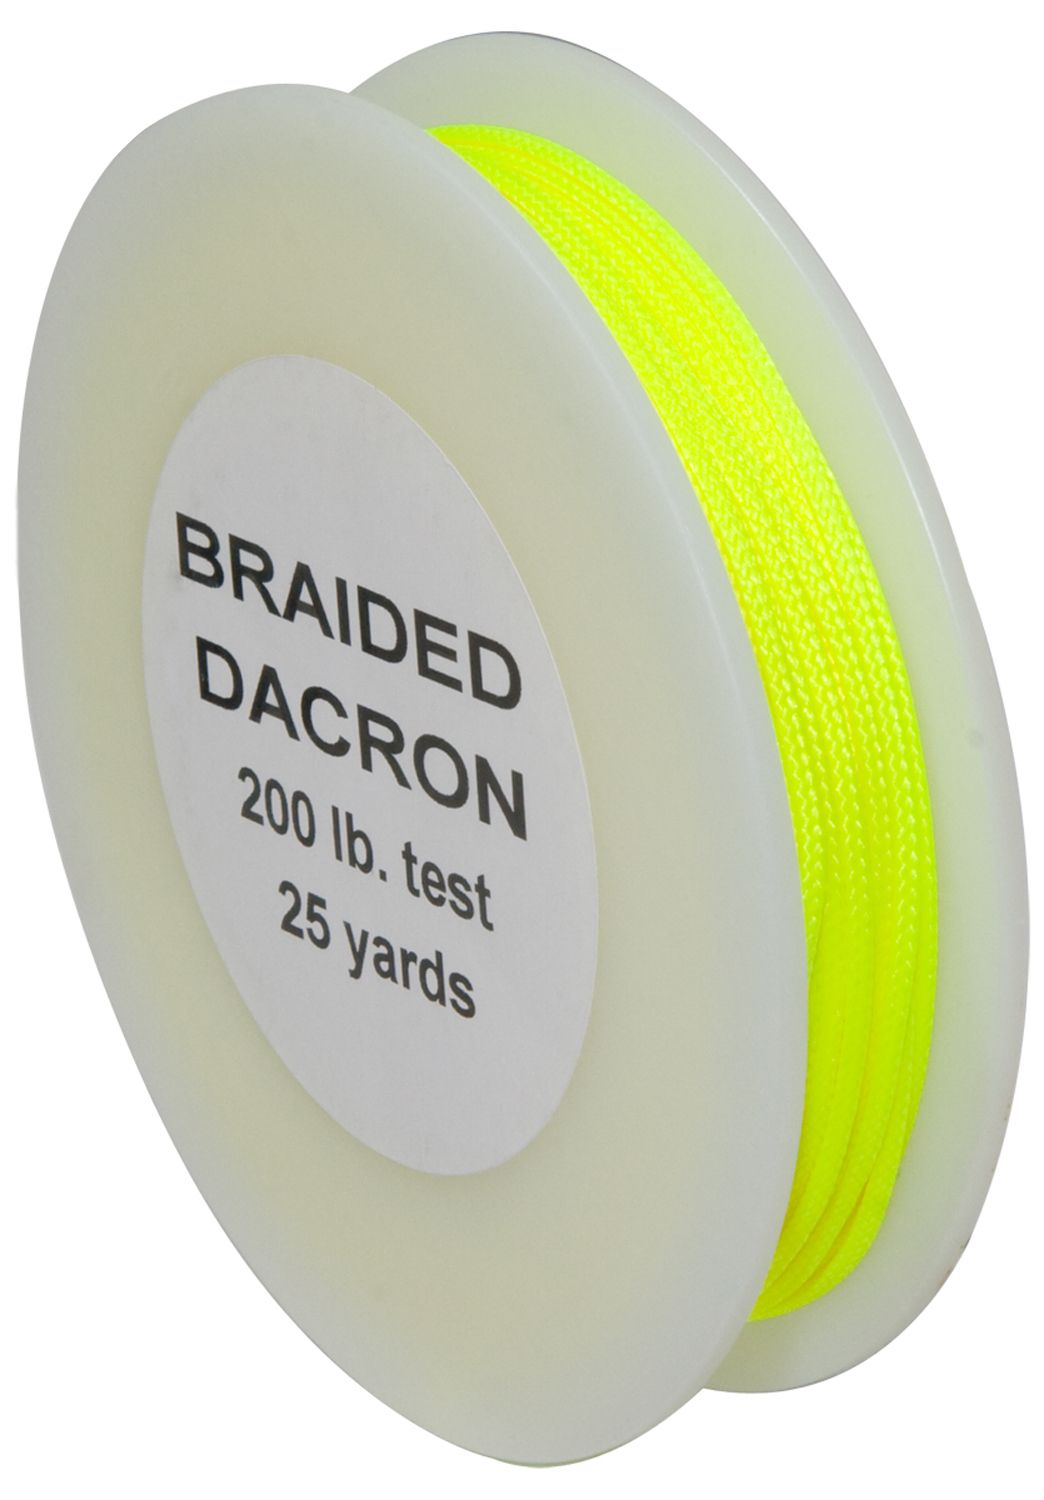 braided dacron fishing line